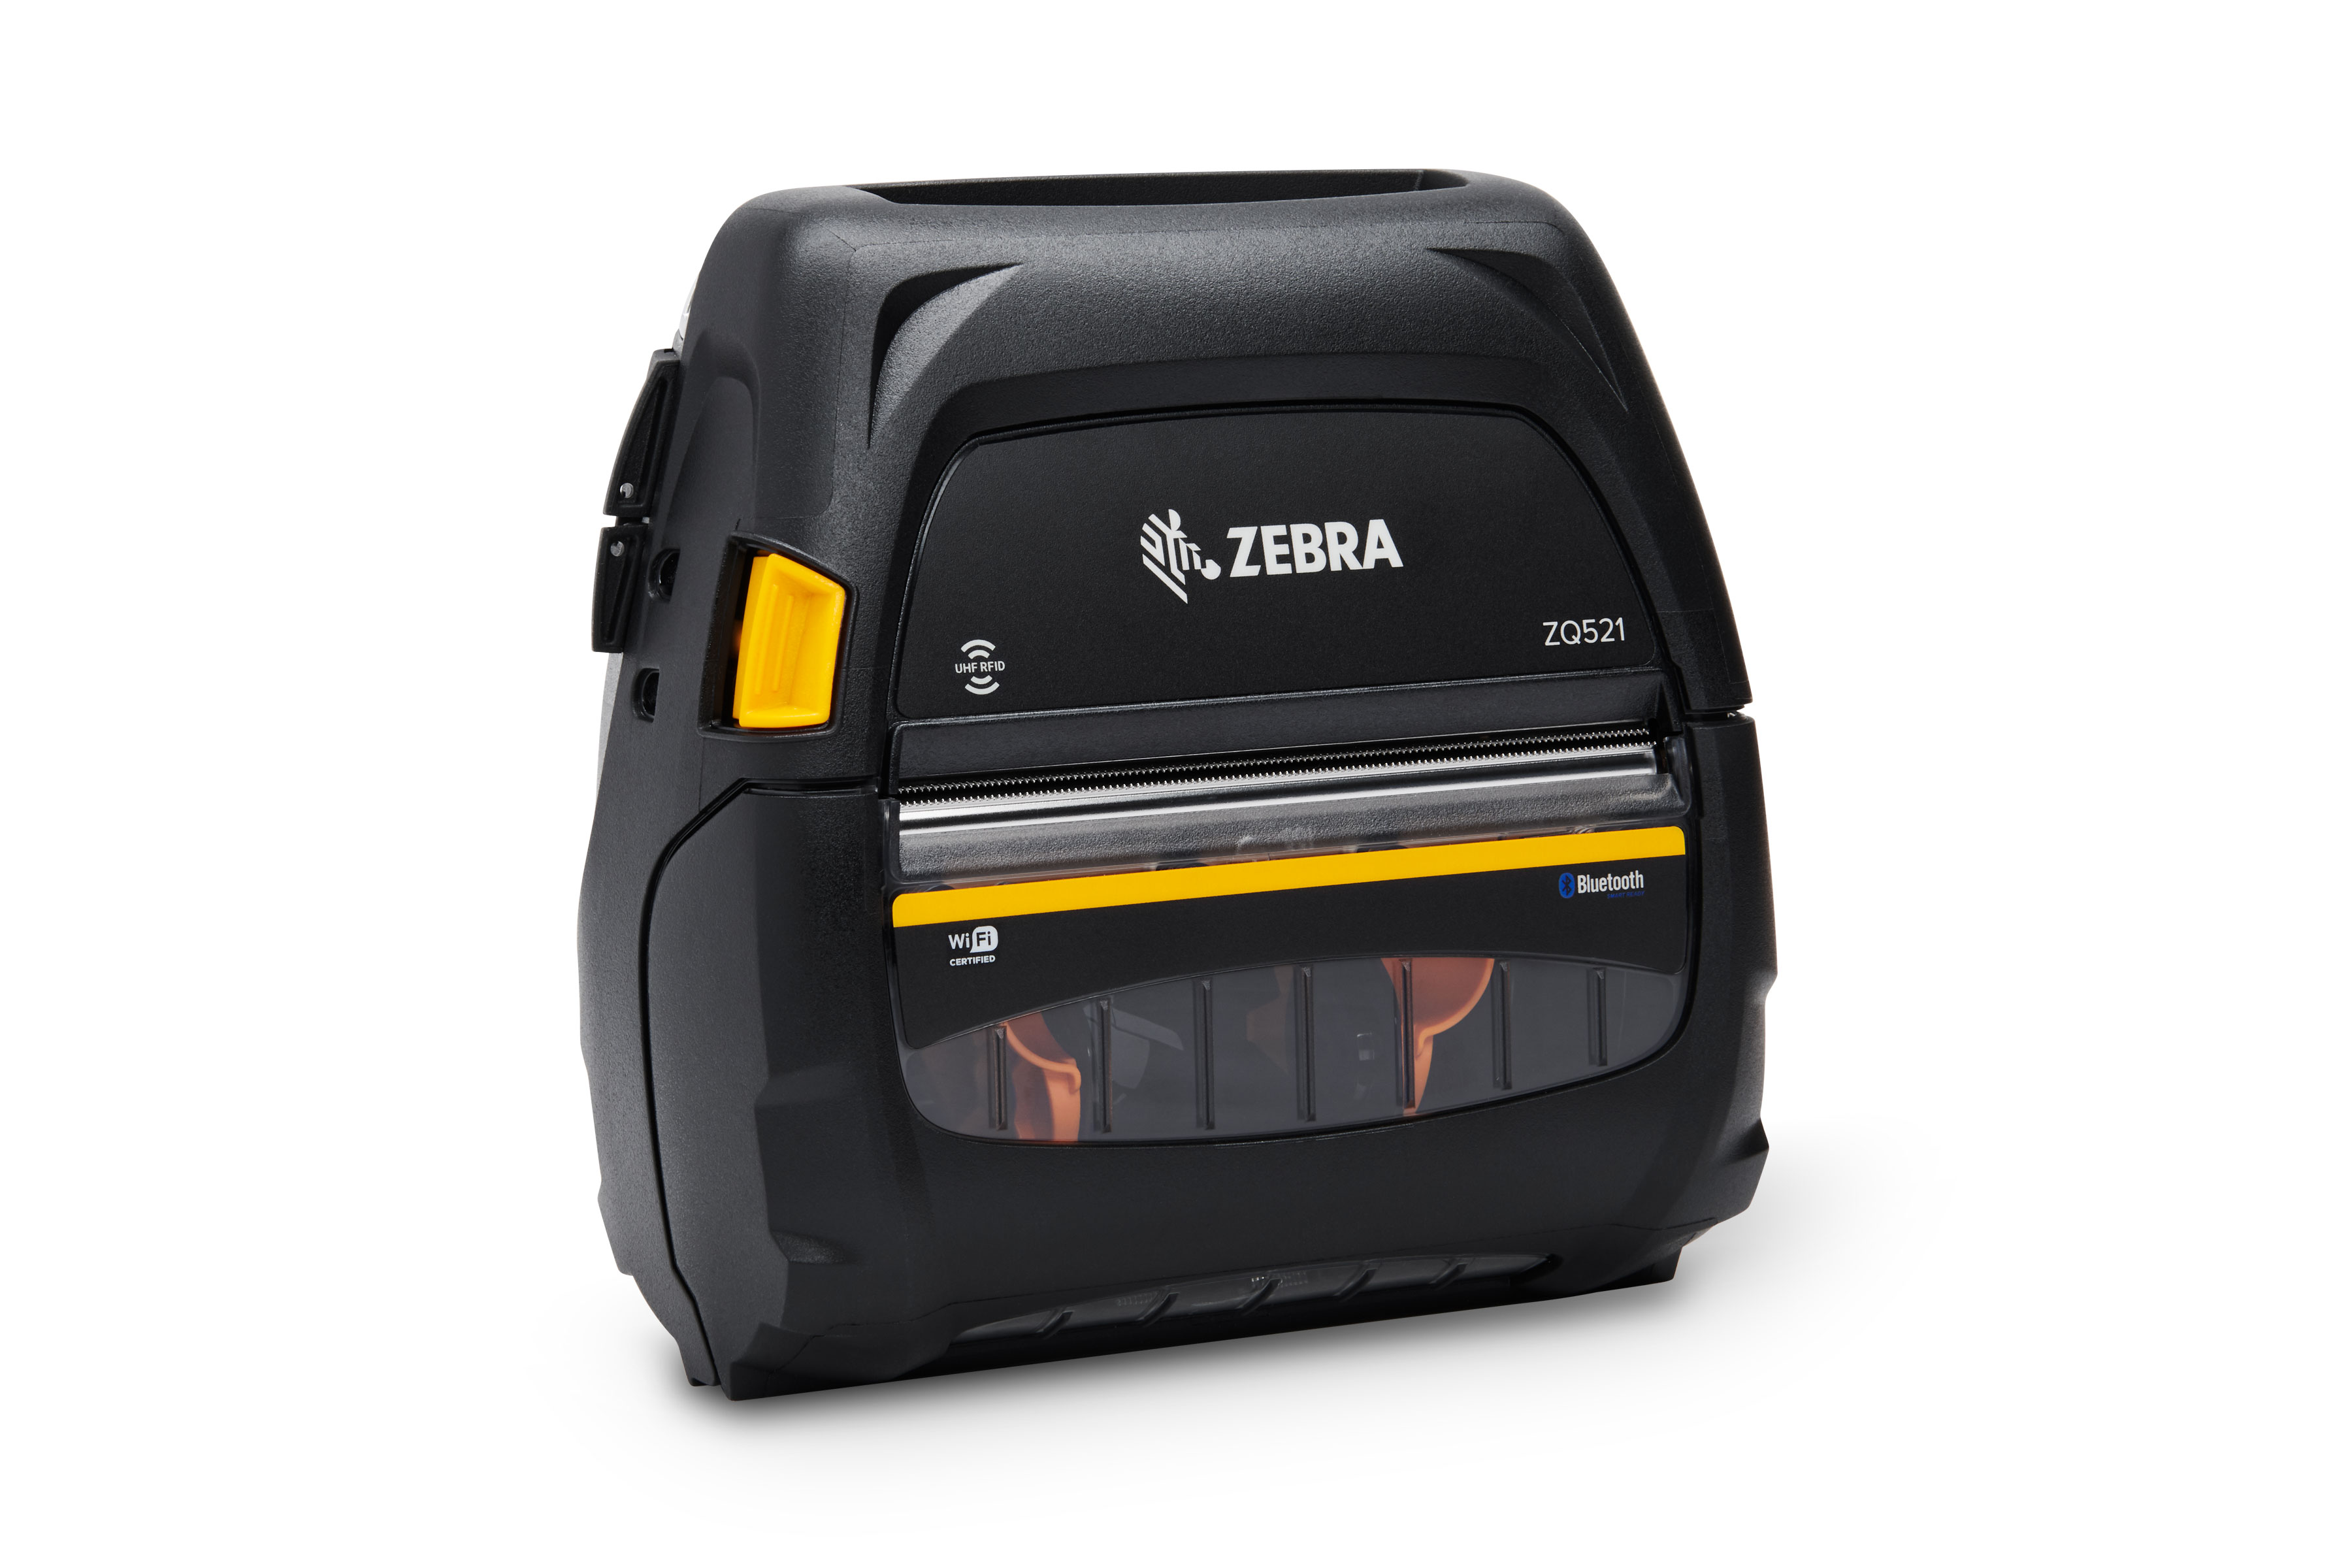 Zebra ZQ521R mobile RFID printer